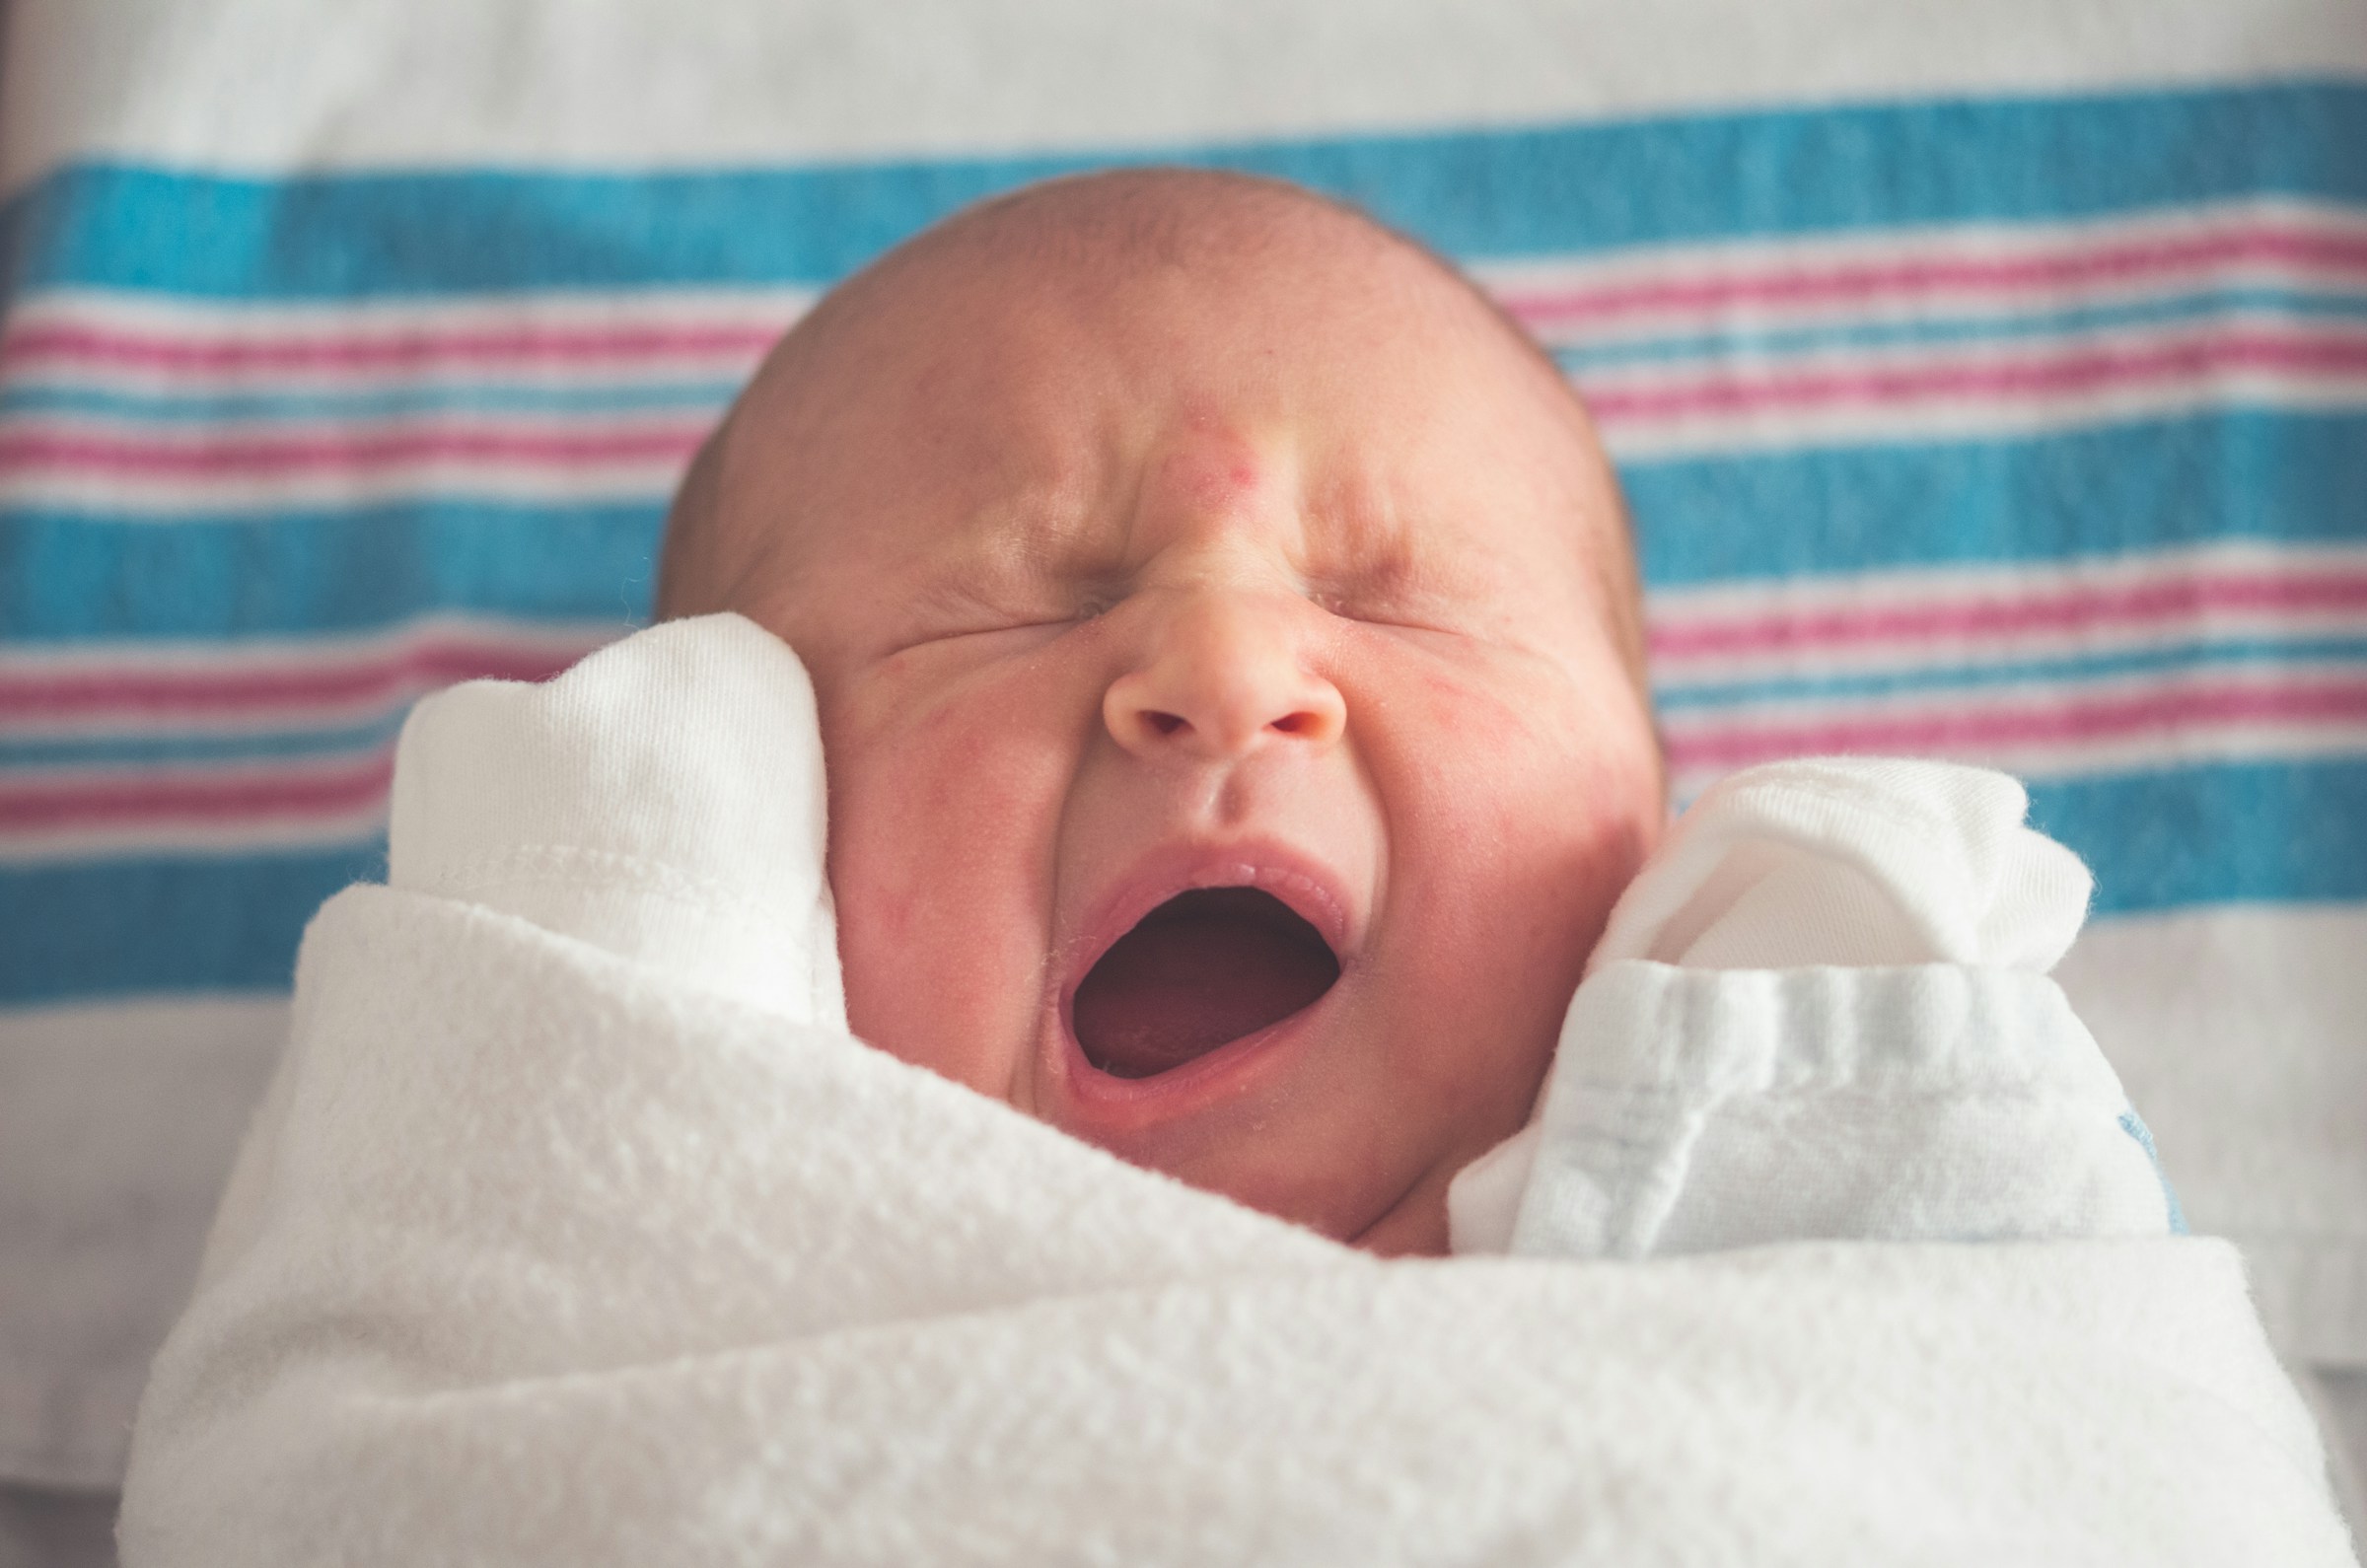 A yawning newborn baby | Source: Unsplash